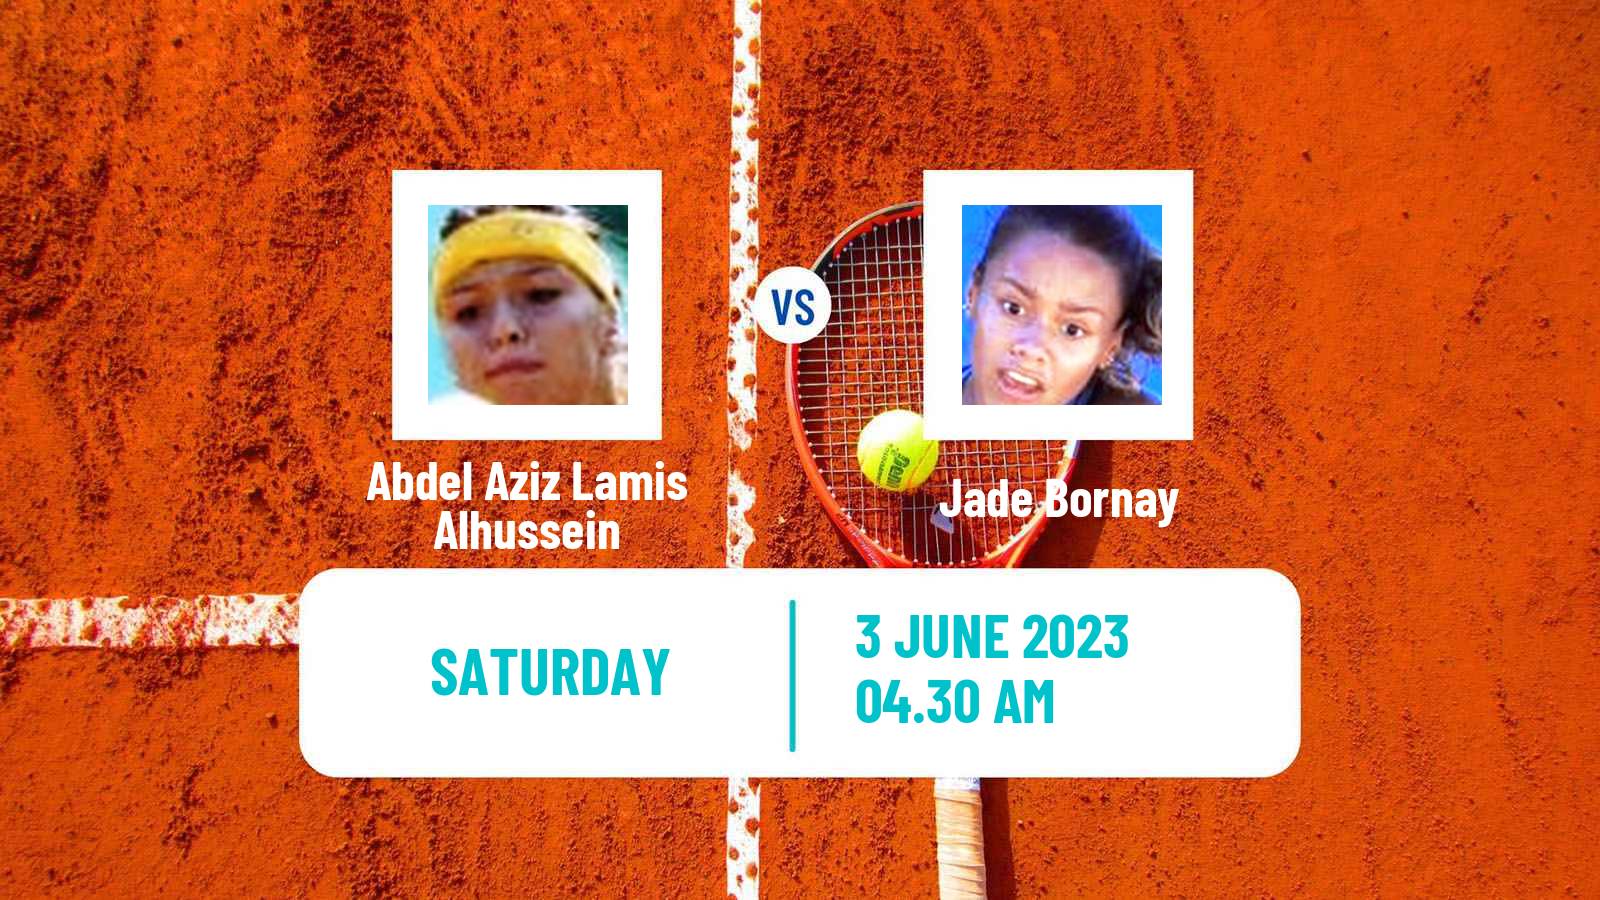 Tennis ITF W15 Monastir 17 Women Abdel Aziz Lamis Alhussein - Jade Bornay